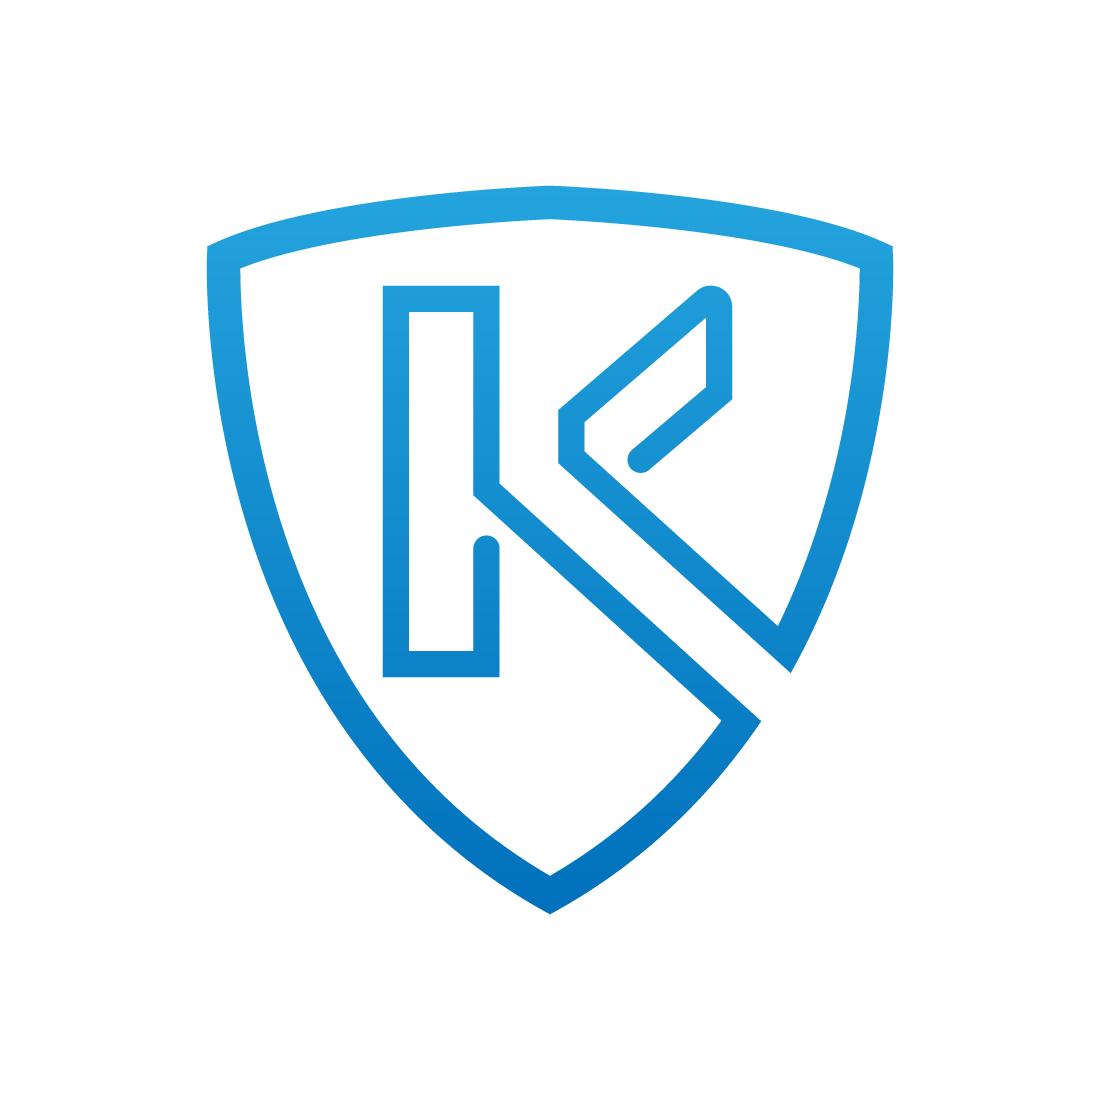 Letter K logo preview image.